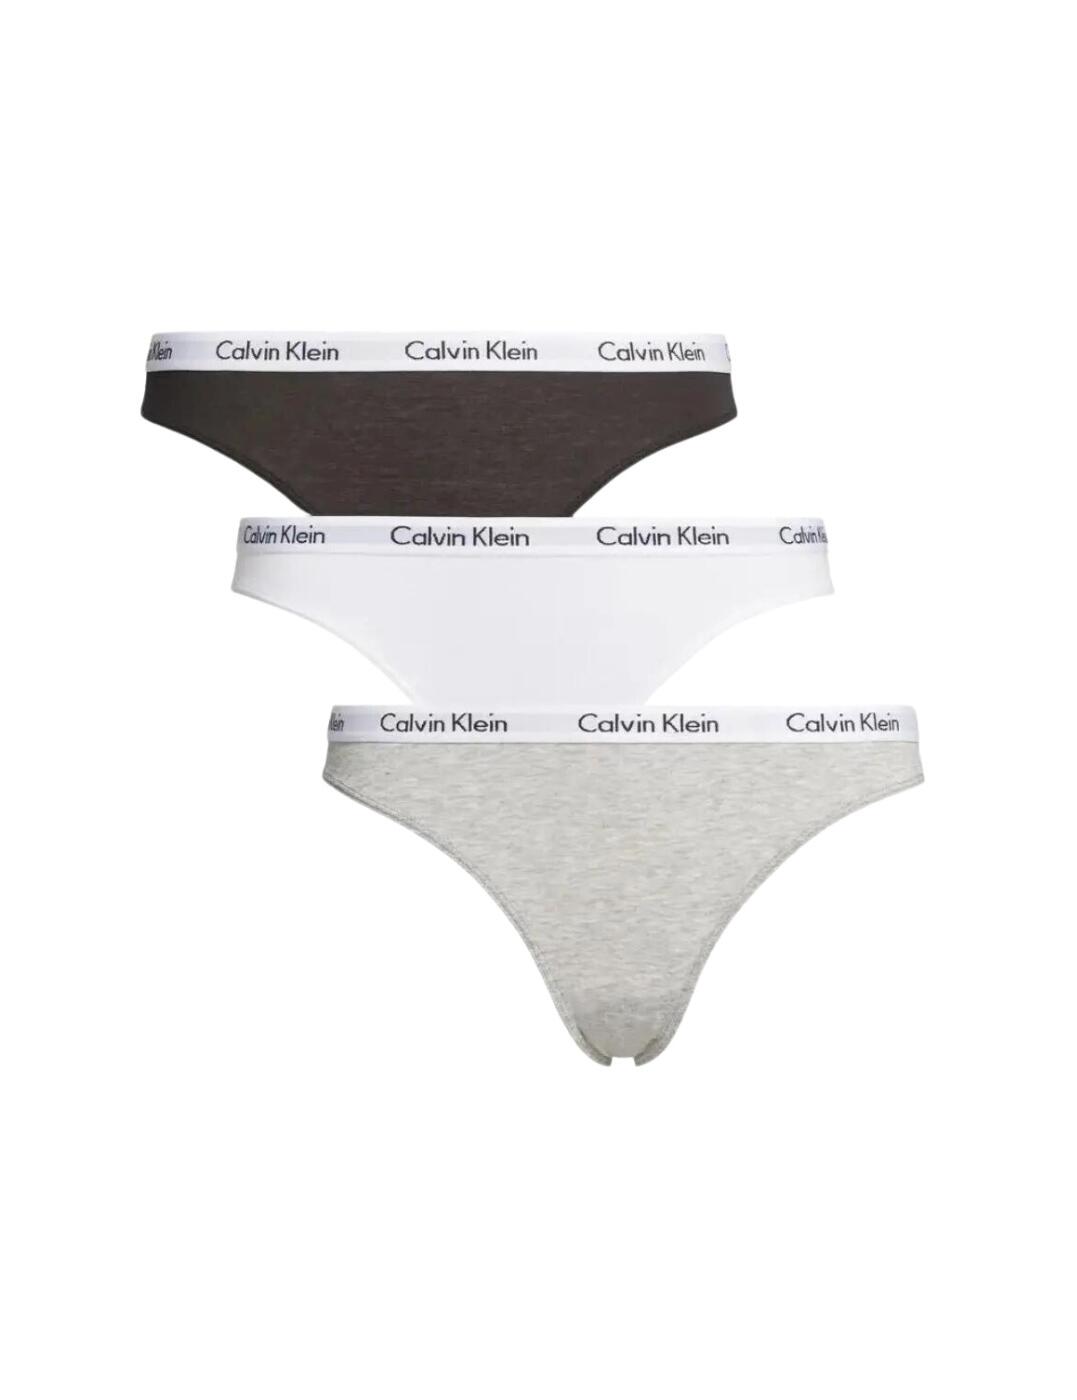 Calvin Klein Carousel Bikini Brief 3 Pack Black/White/Grey Heather